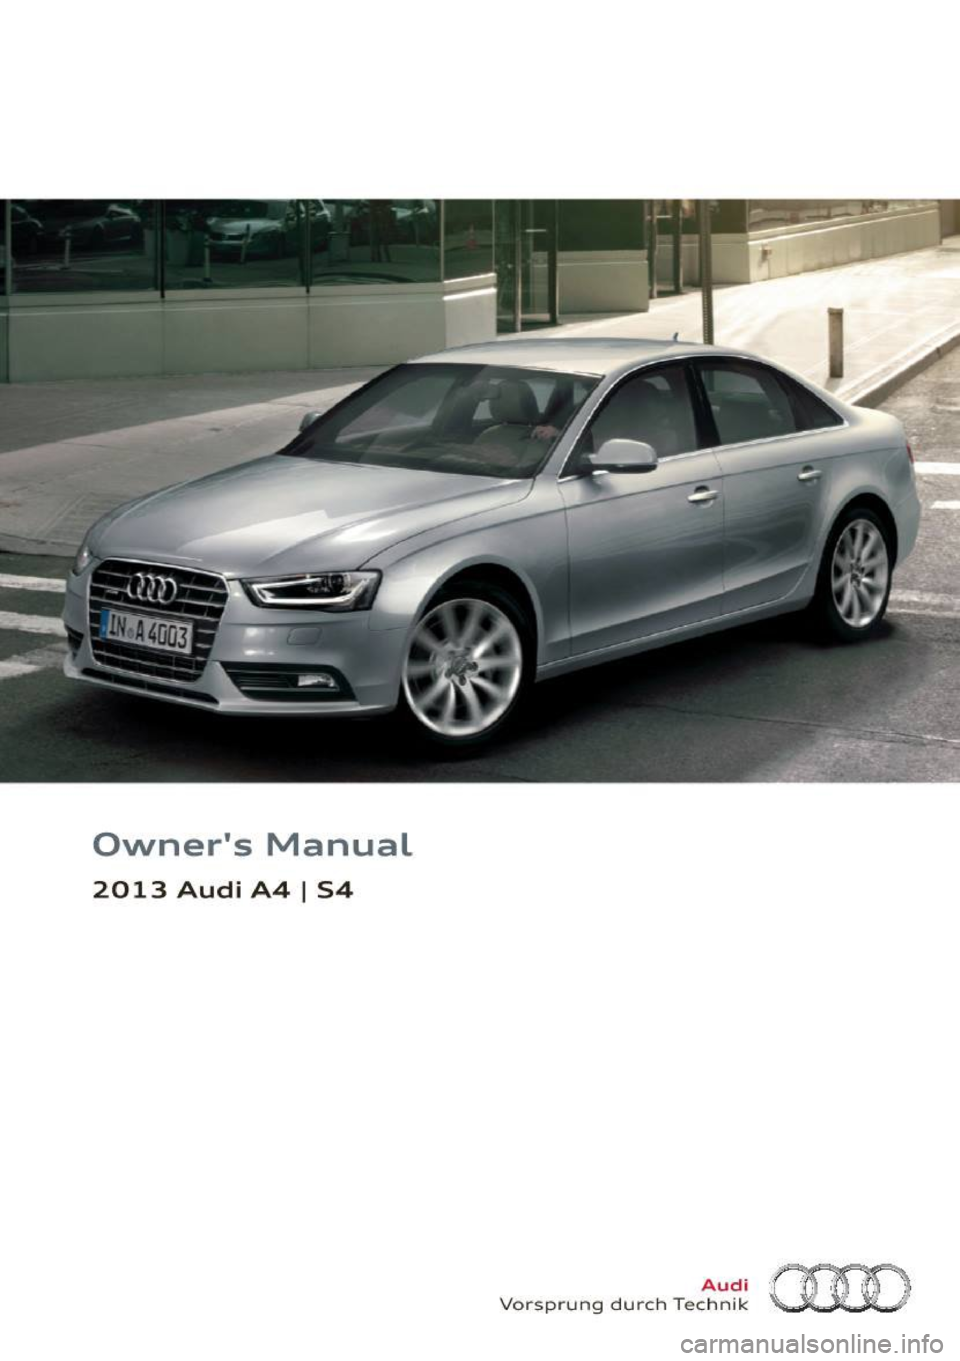 AUDI A4 2013  Owners Manual Owners  Manual 
2013 Audi  A4 I S4 
Vorsp rung  du rch  Tec~~f~ (HO  